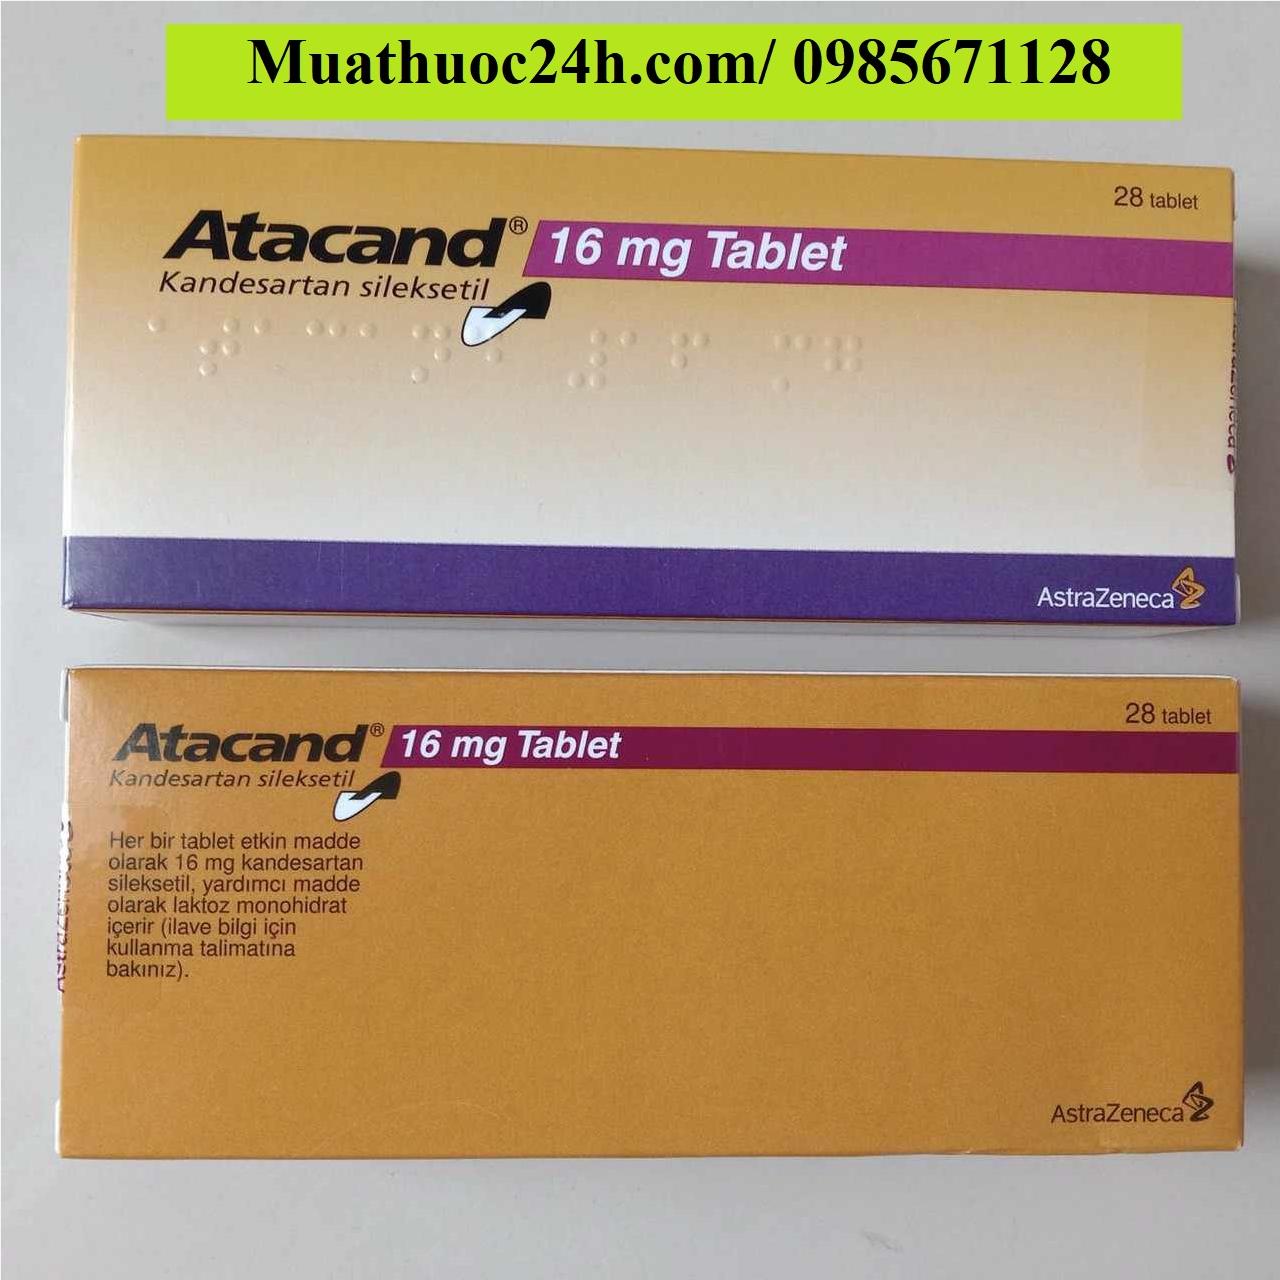 Thuốc Atacand 16mg Candesartan Cilexetil giá bao nhiêu mua ở đâu?